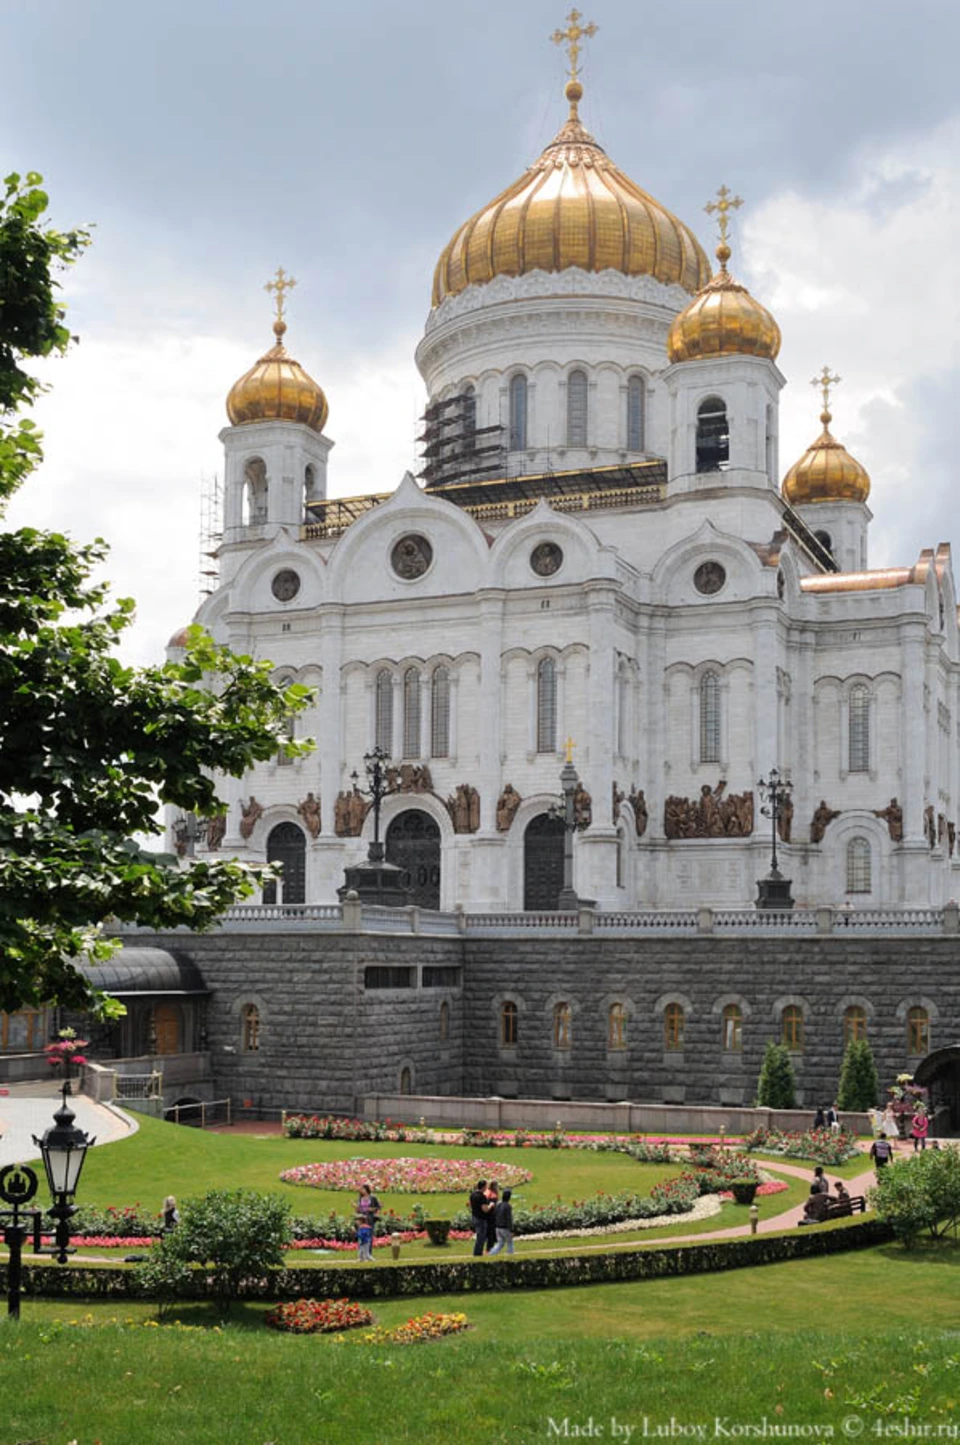 Храм христа спасителя в москве